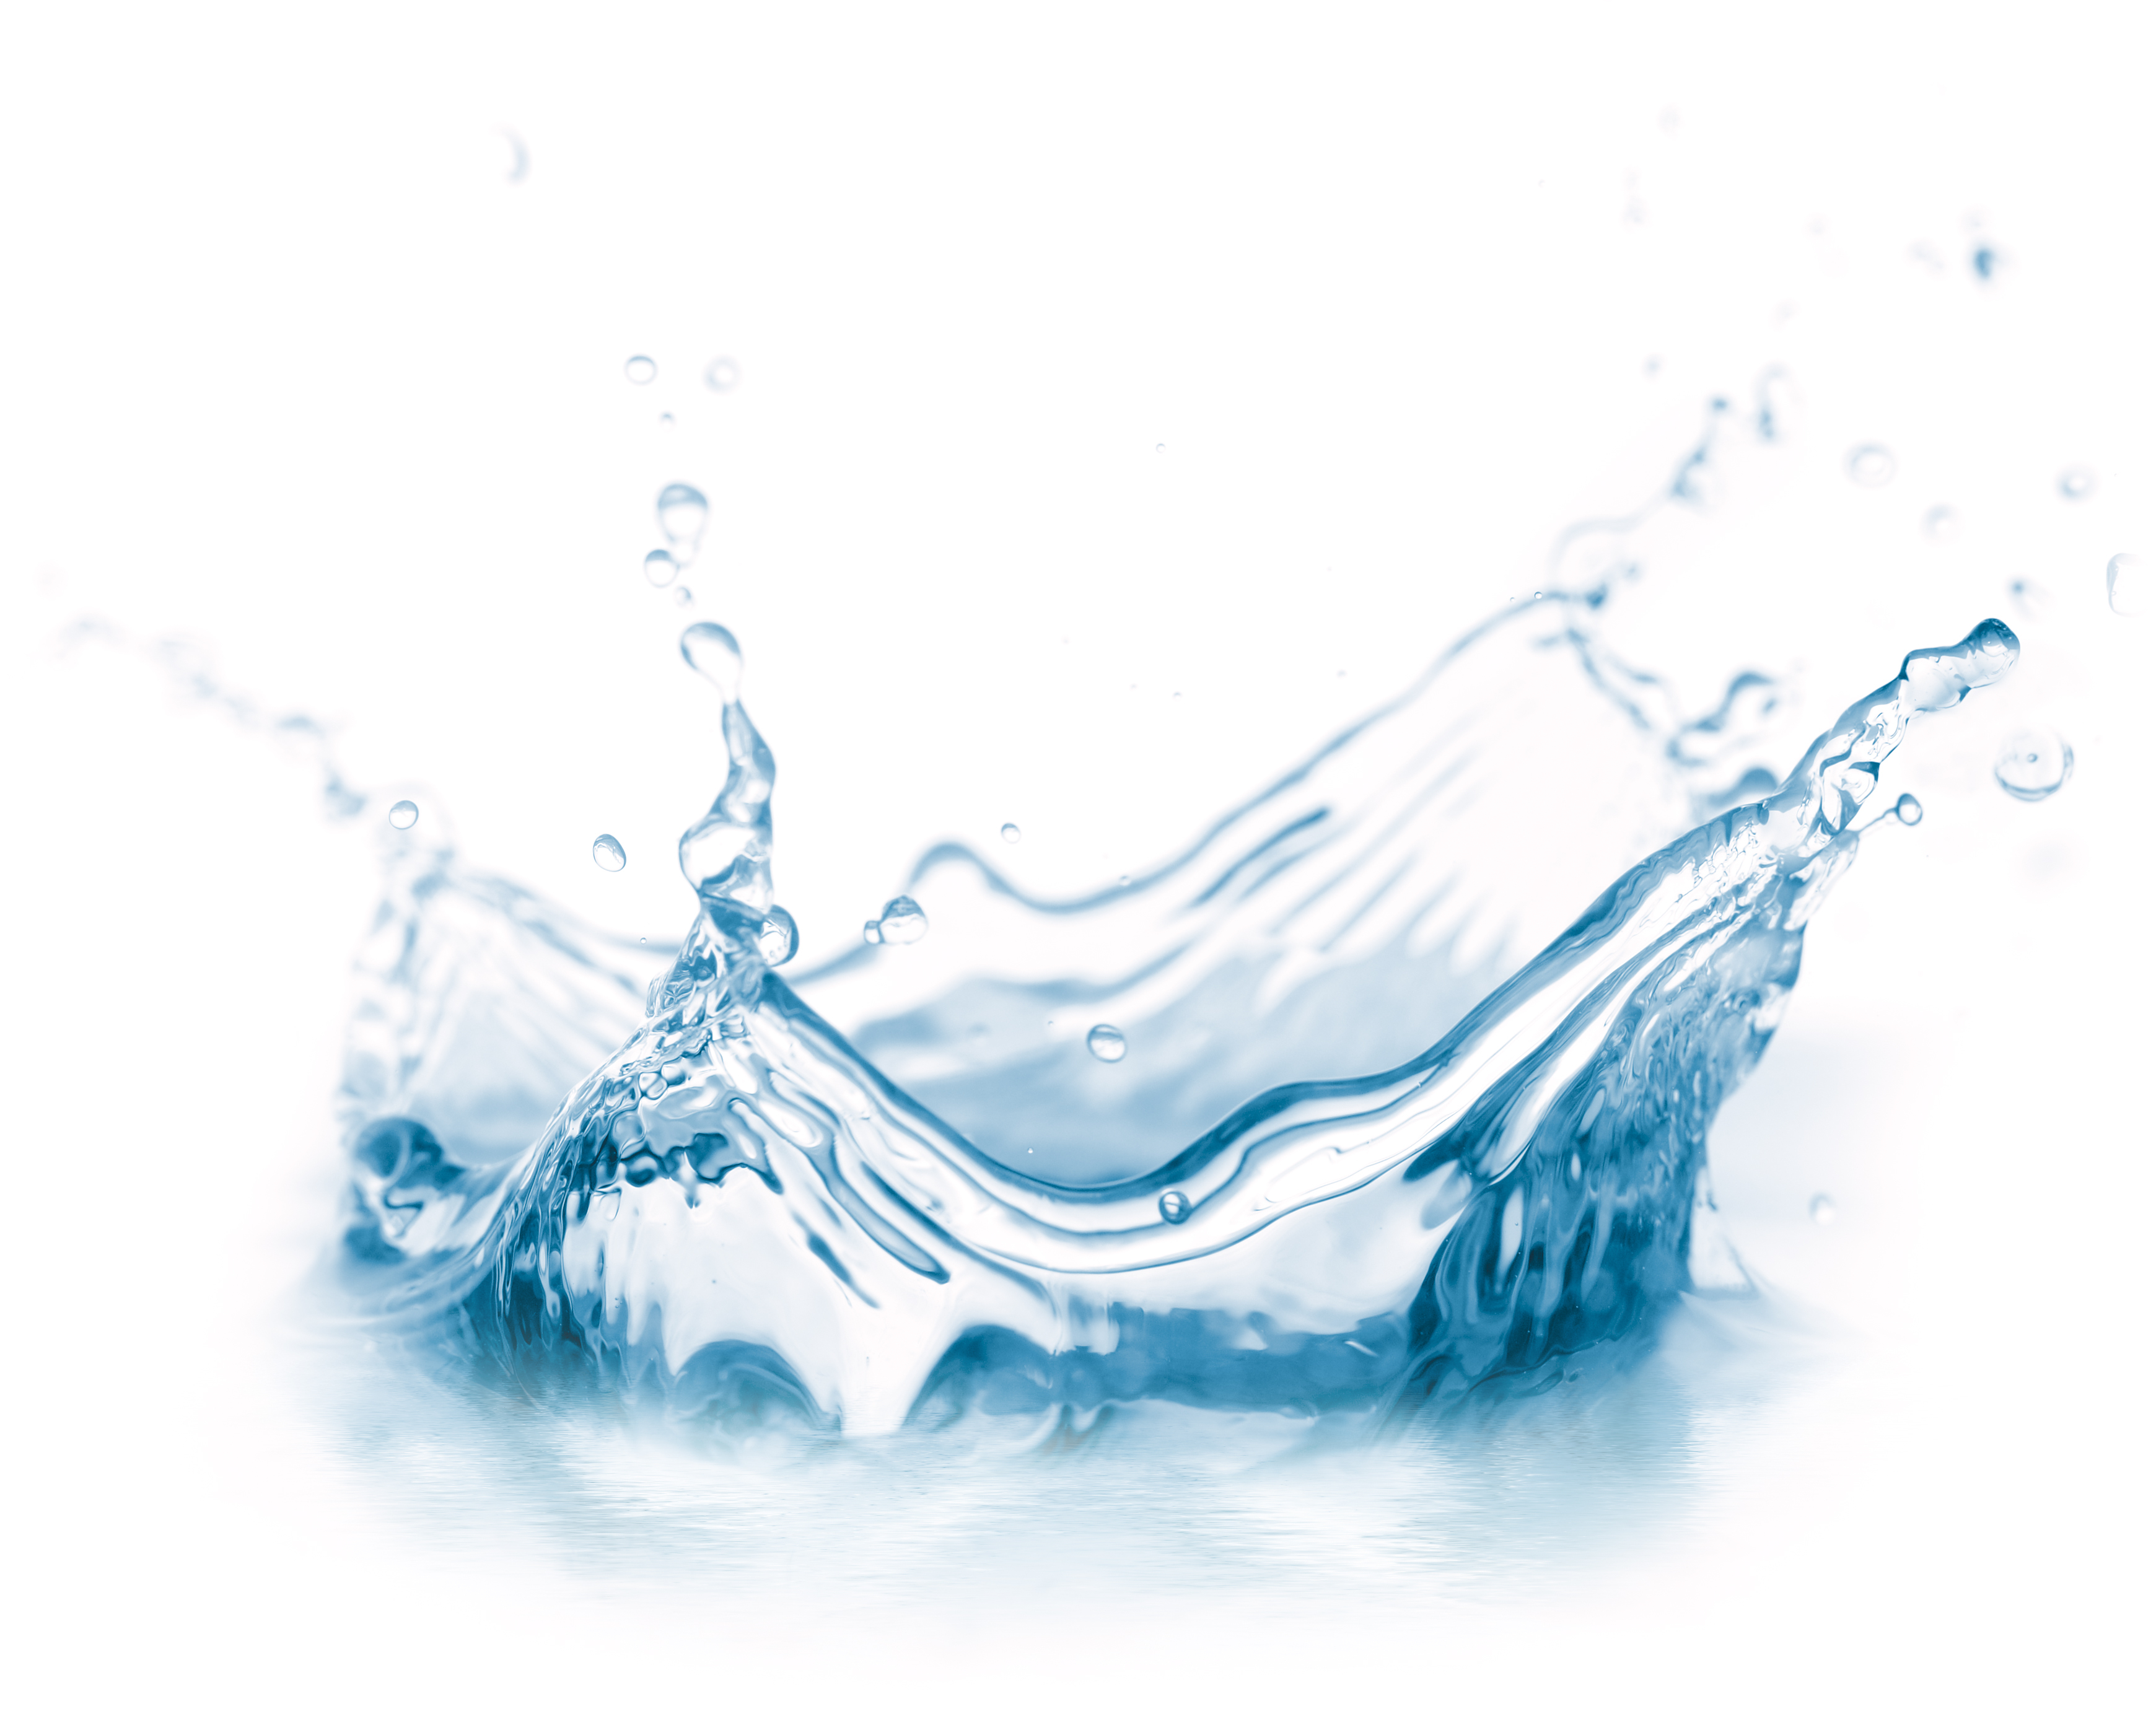 Ultrascyence dirty water splash hiphop image